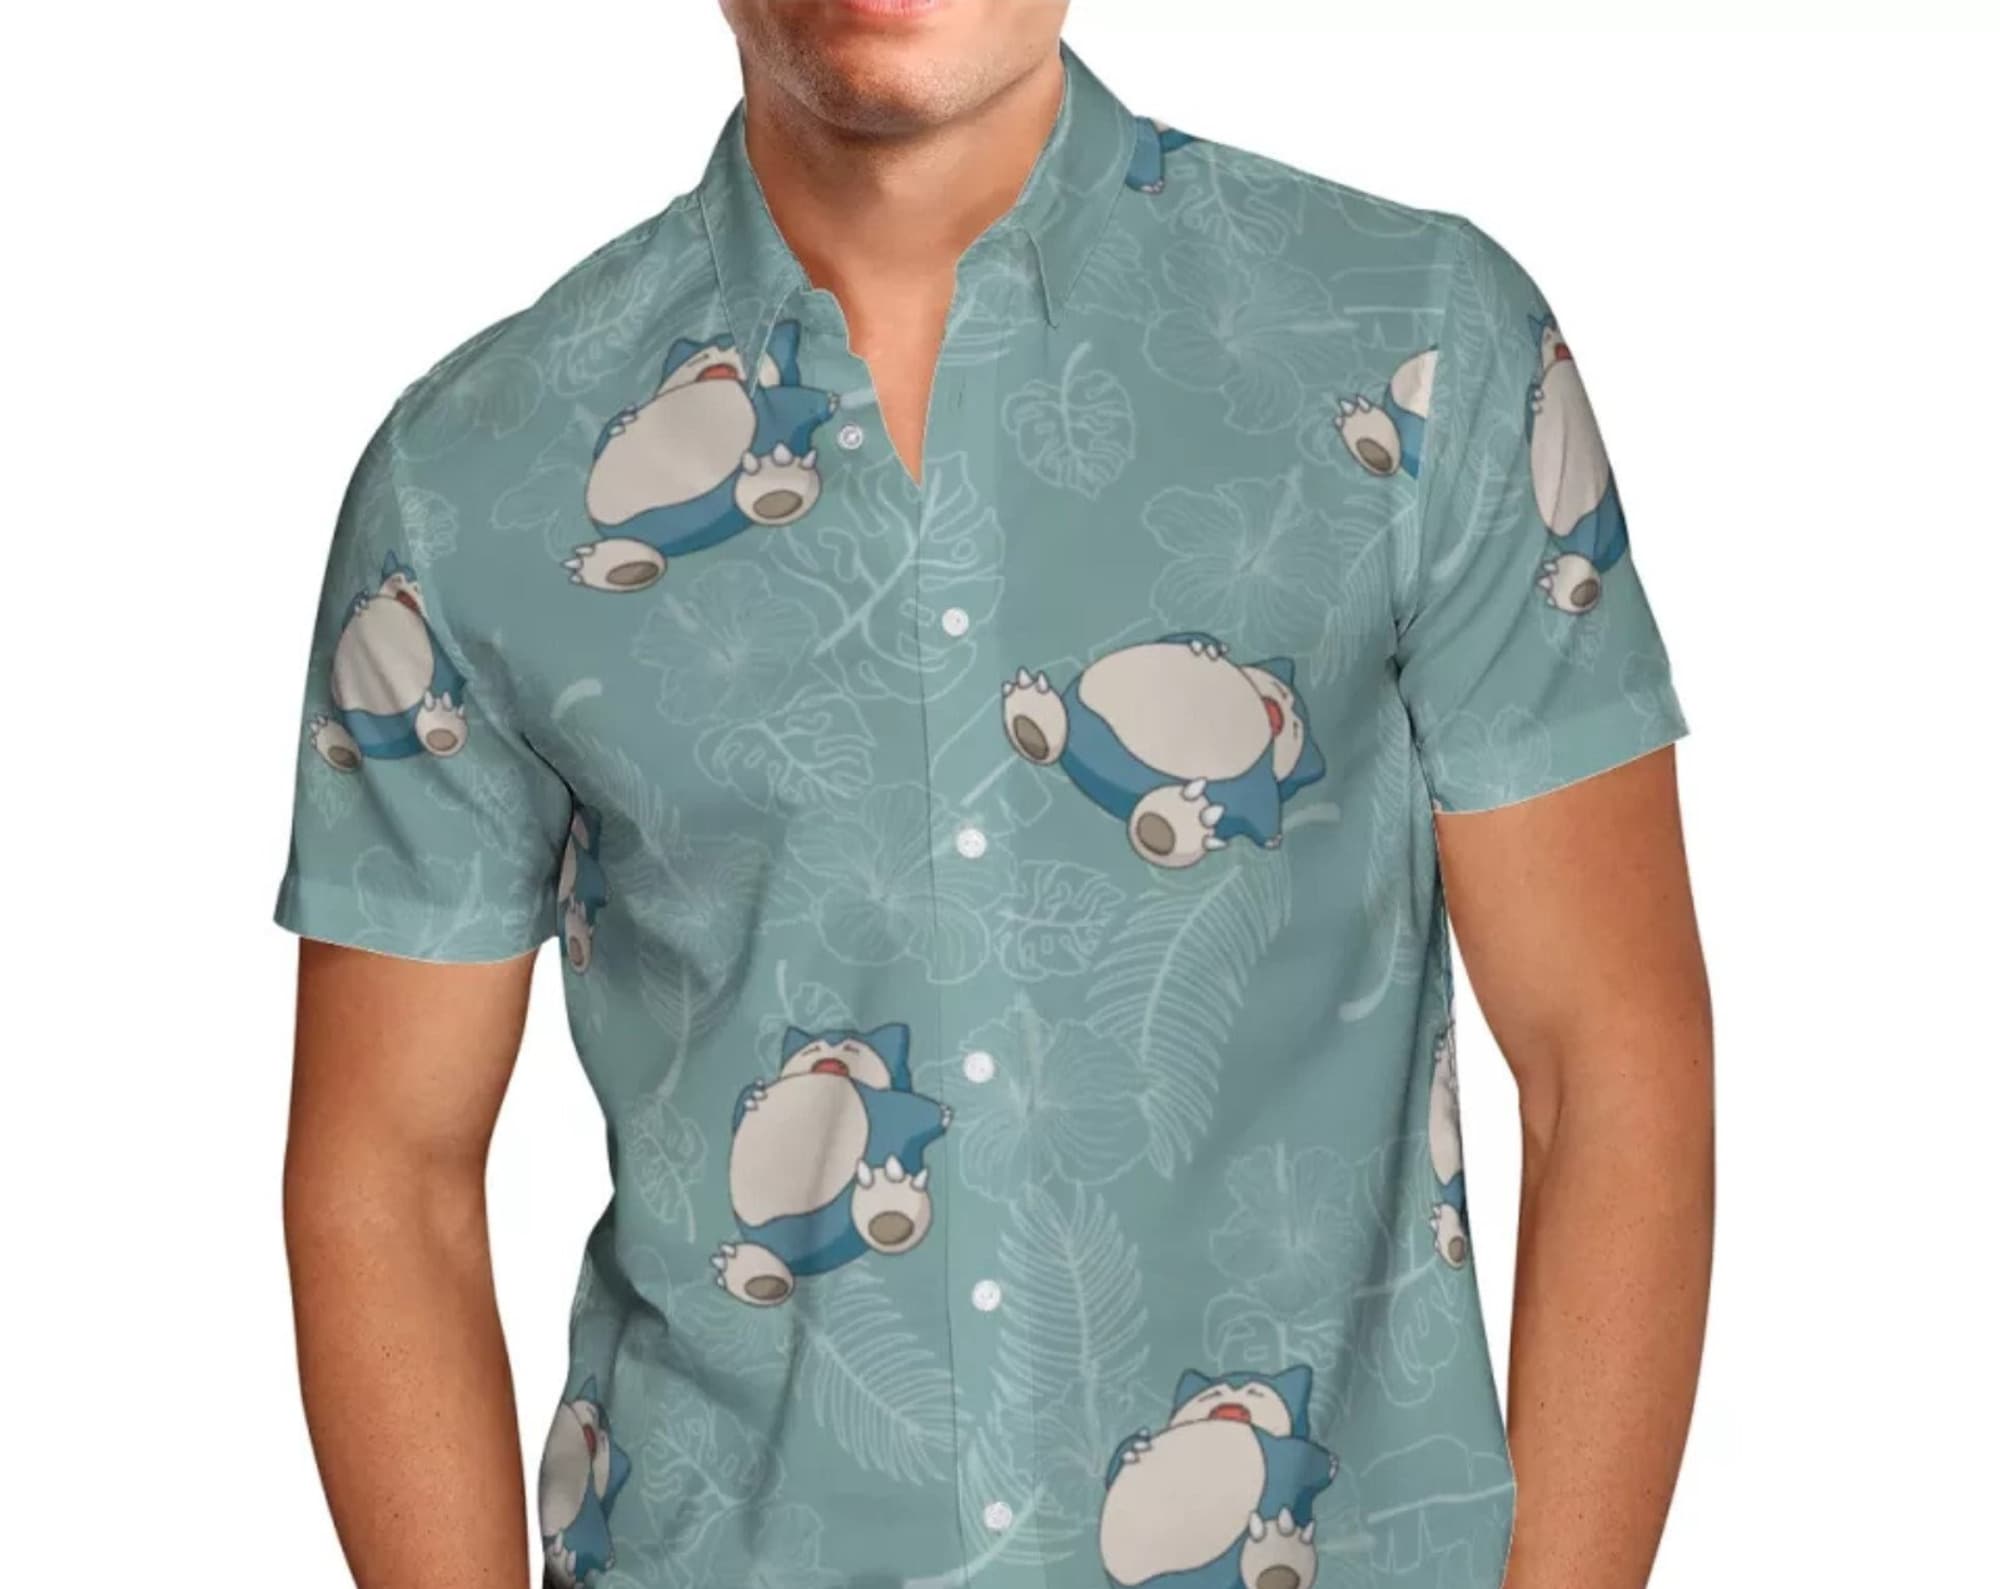 Discover PKM Sn Lax Hawaiian shirt!